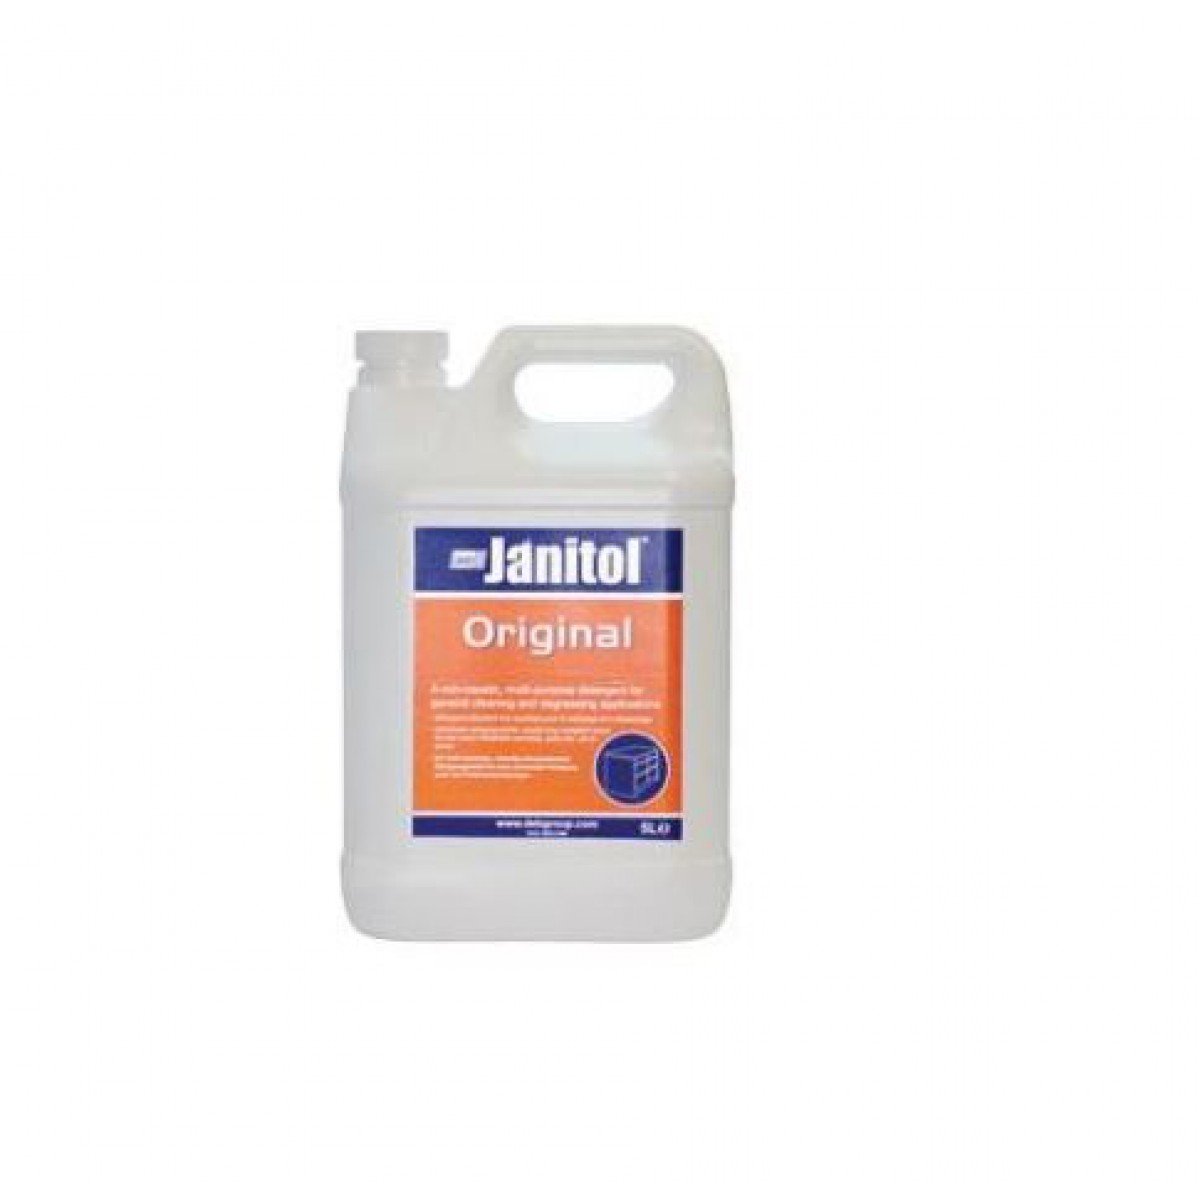 Janitol® Original Degreasing Detergent